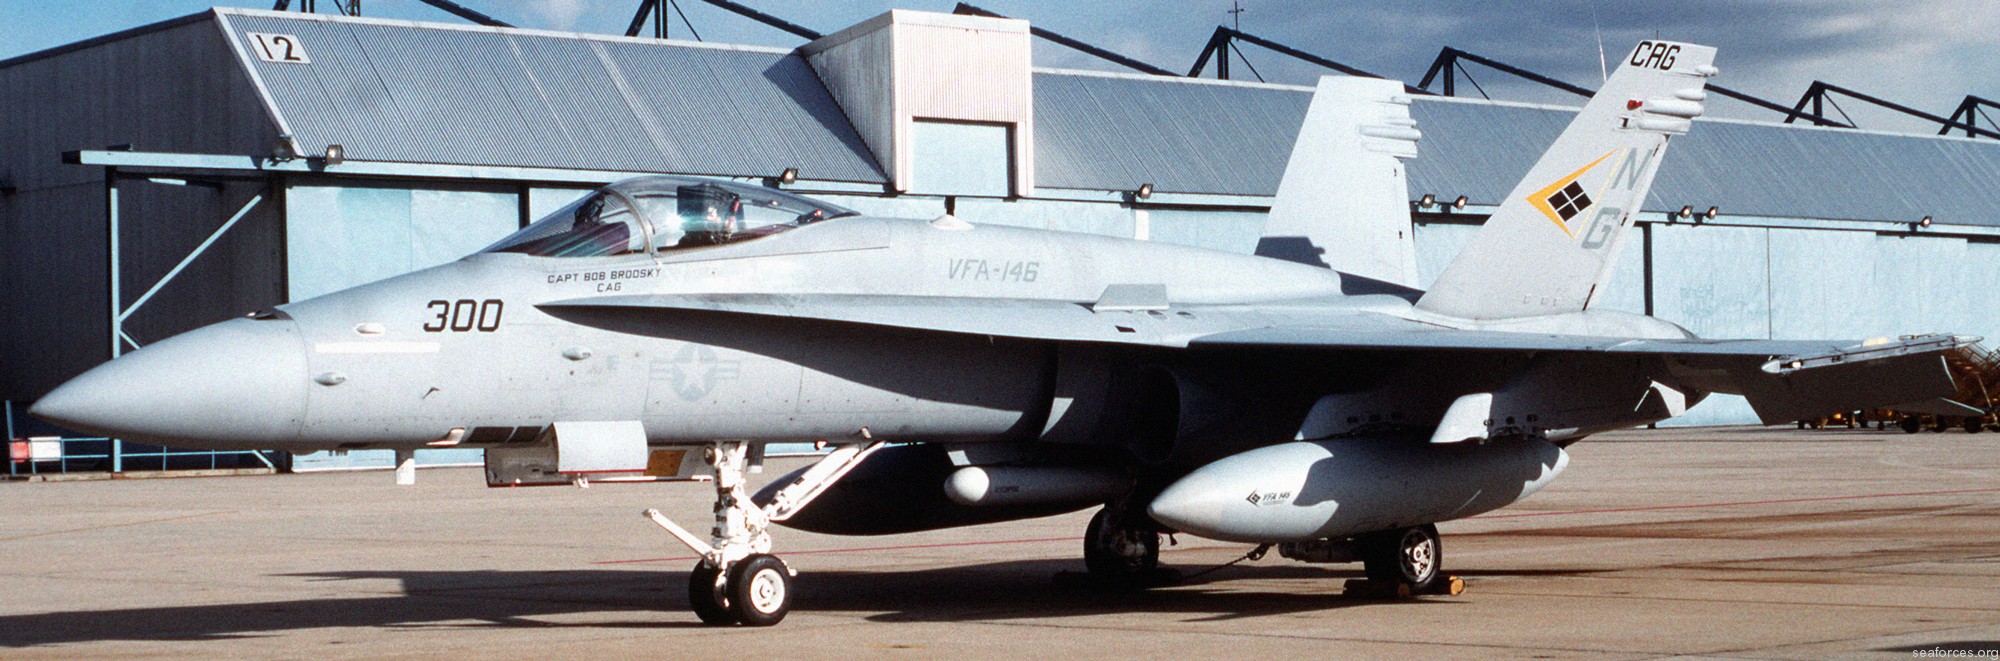 vfa-146 blue diamonds strike fighter squadron f/a-18c hornet carrier air wing cvw-9 nas lemoore california 157